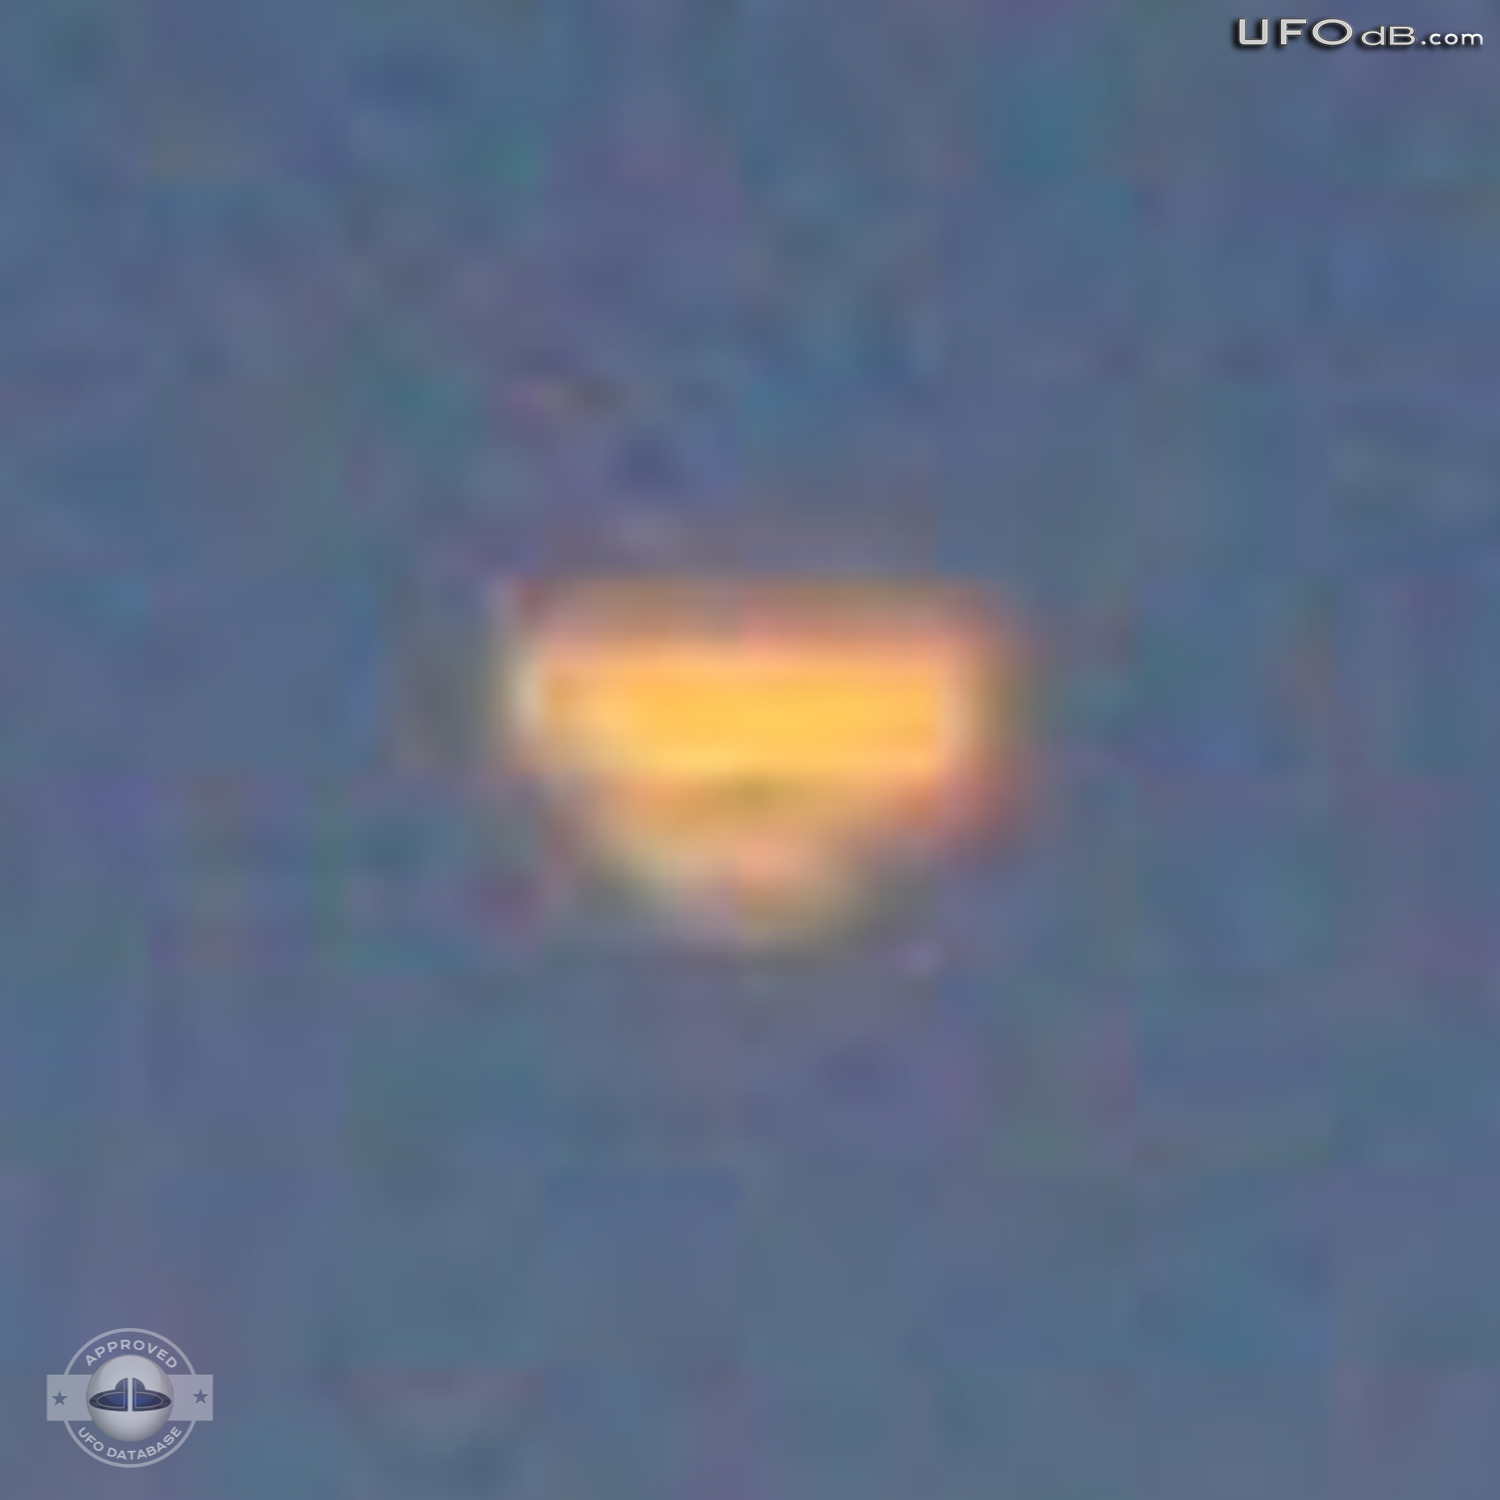 Sundown picture capture UFO near Ipanema beach | Brazil April 21 2011 UFO Picture #344-4